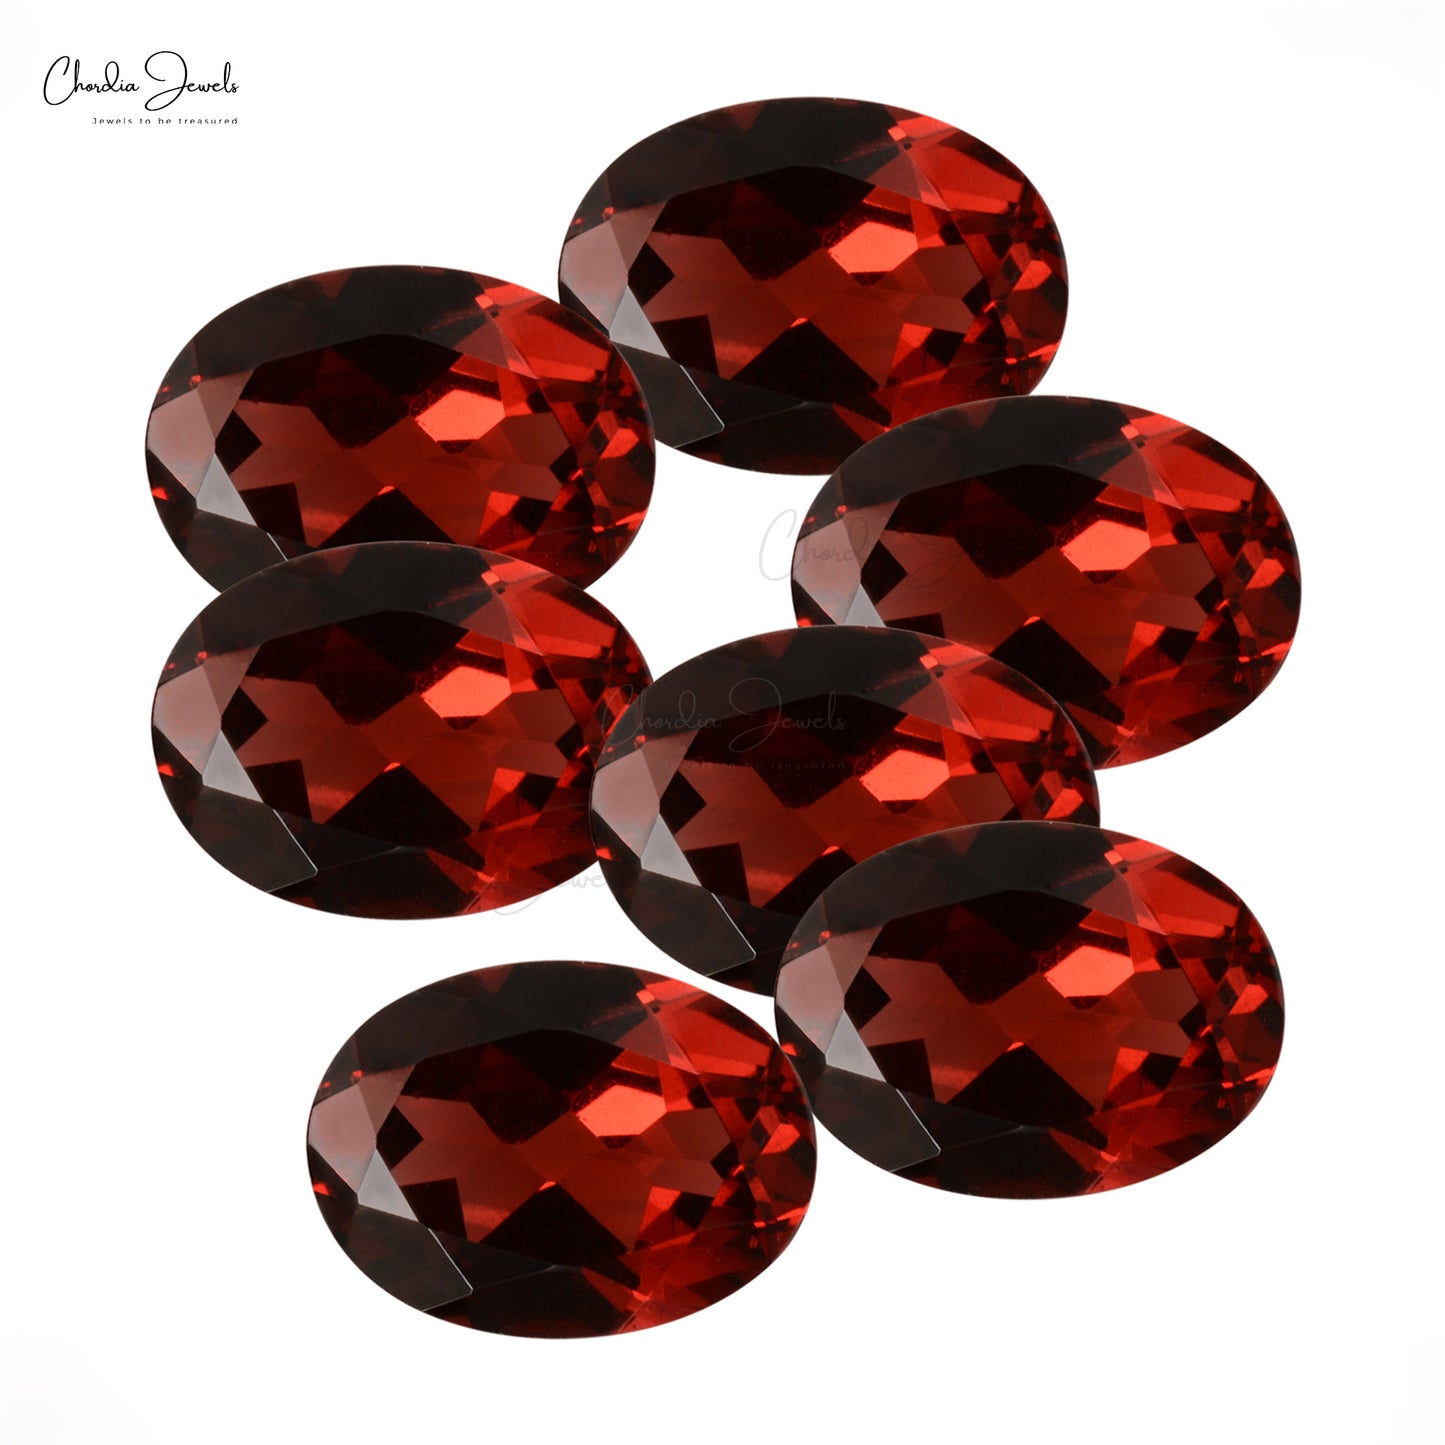 Load image into Gallery viewer, 3 Carat Oval Cut Semi Precious Garnet Gemstone for Jewelry Setting, 1 Piece
